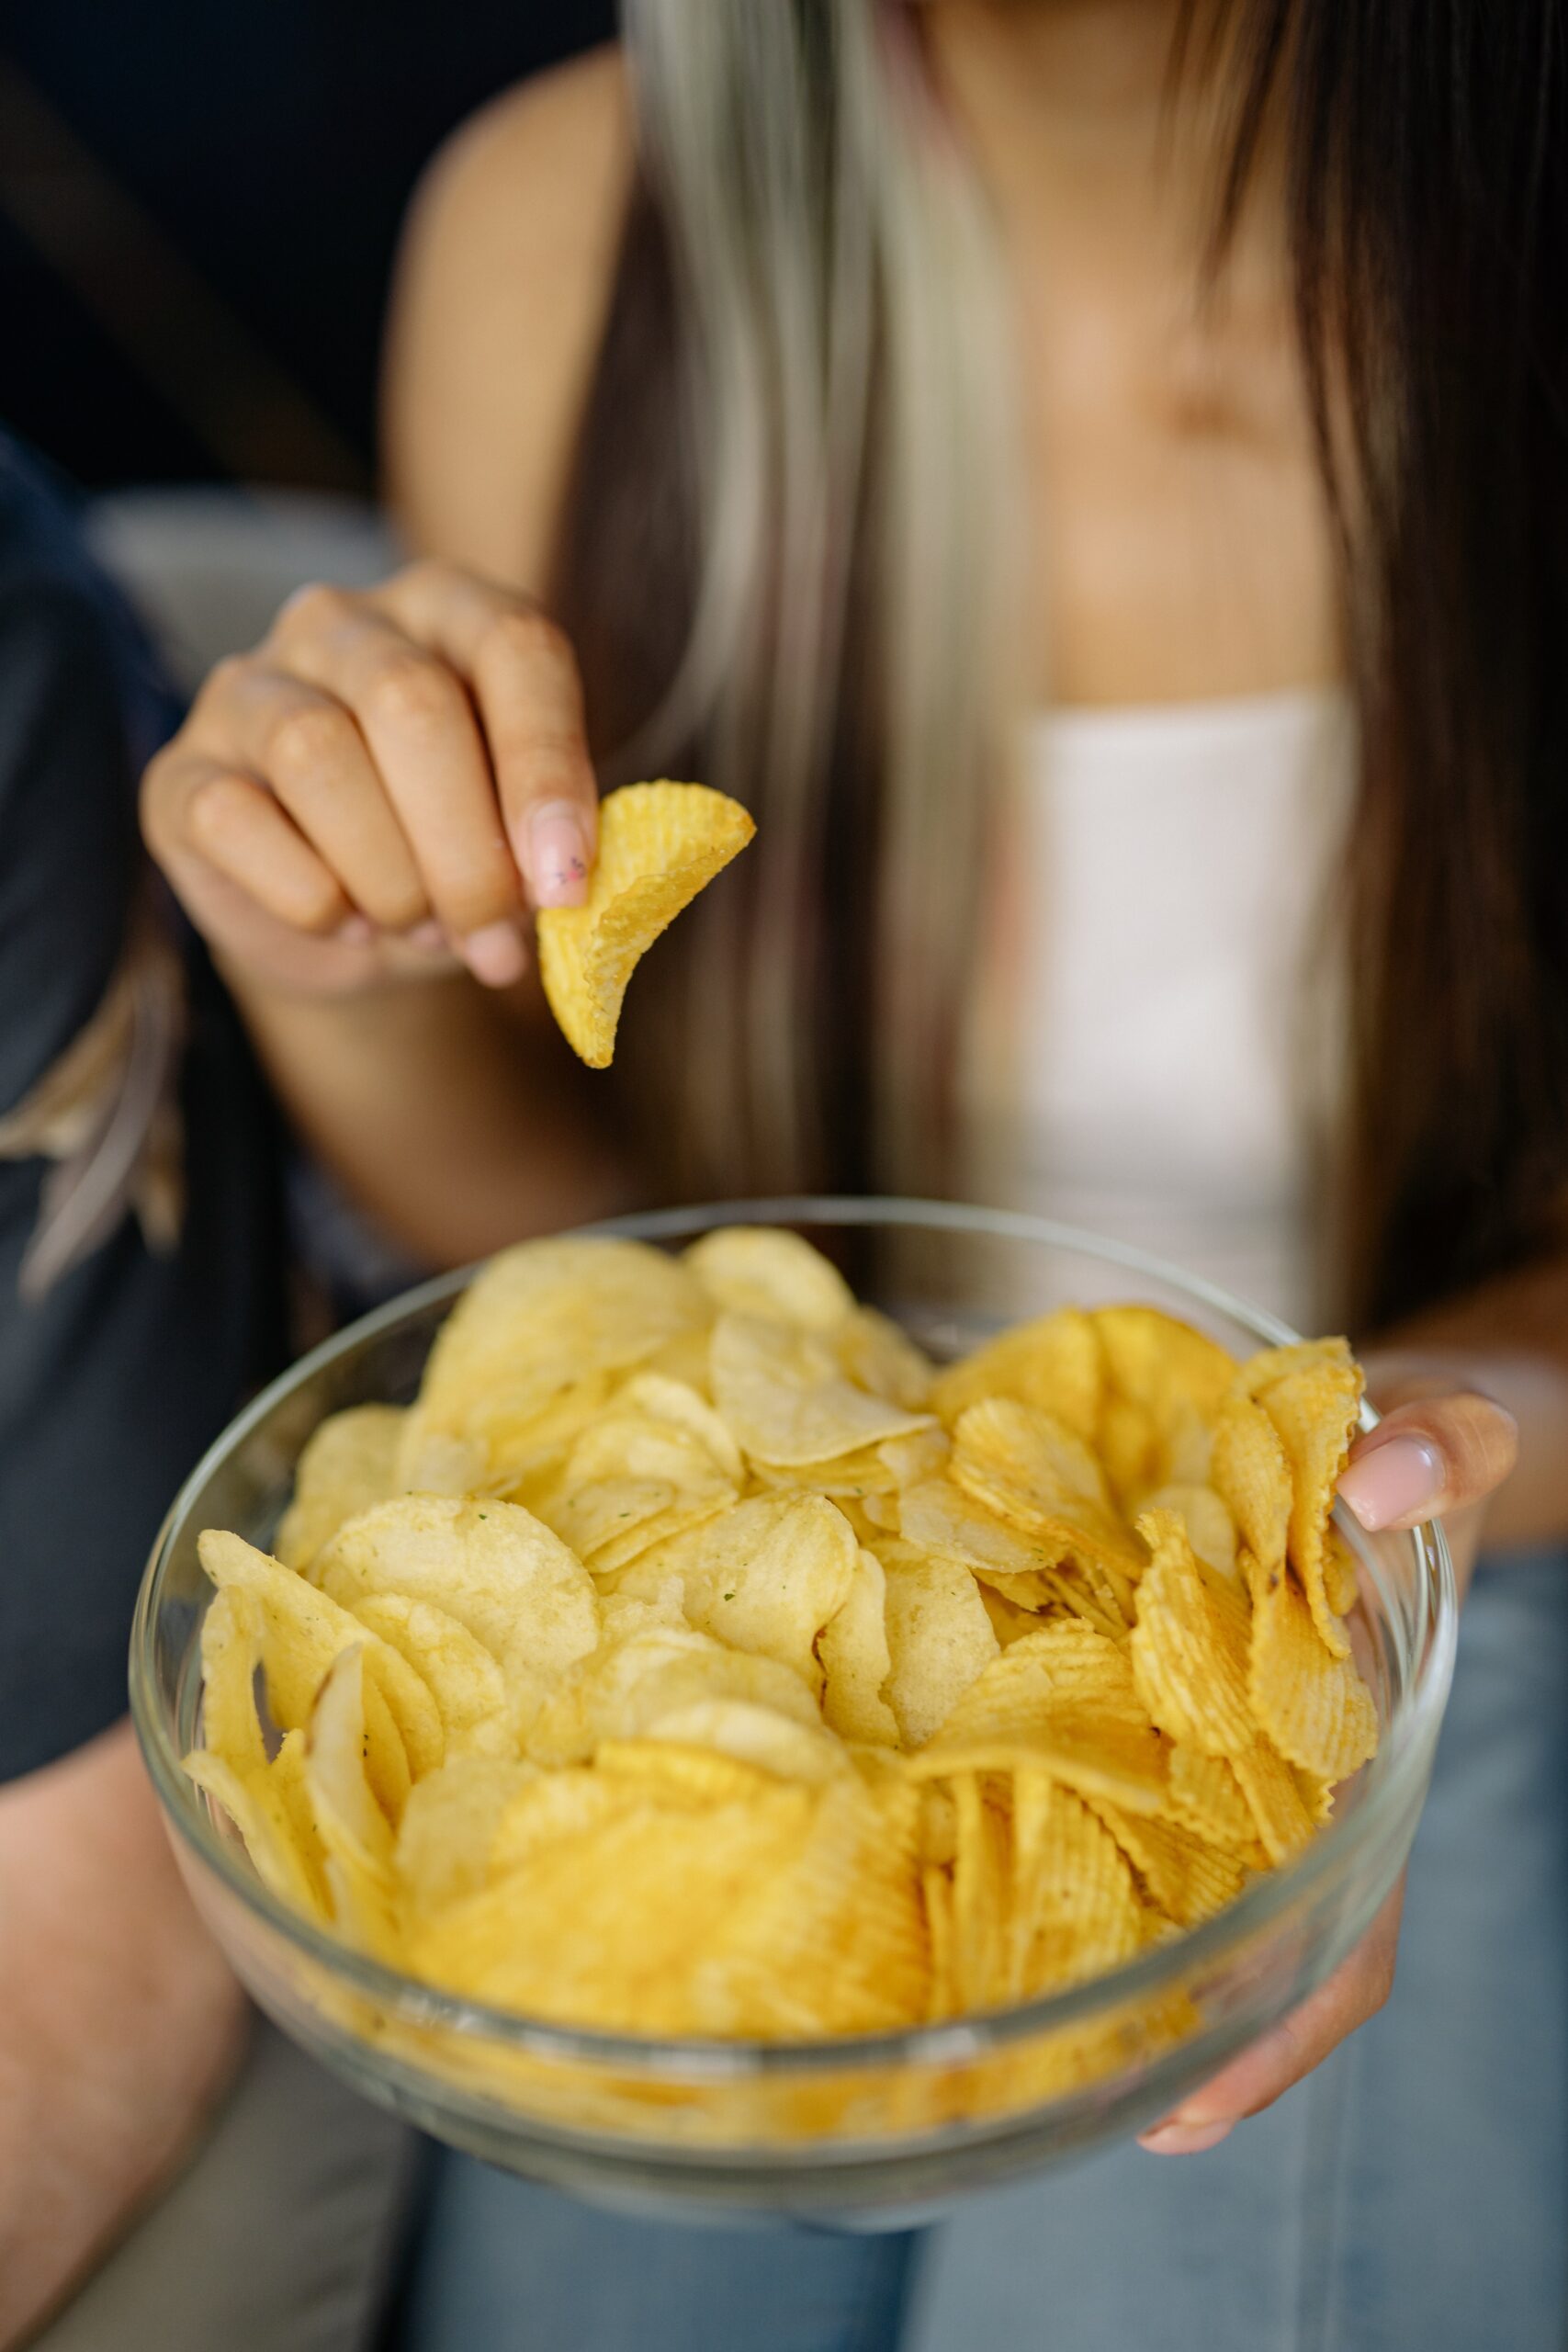 Is Bingo Chips Good For Health?